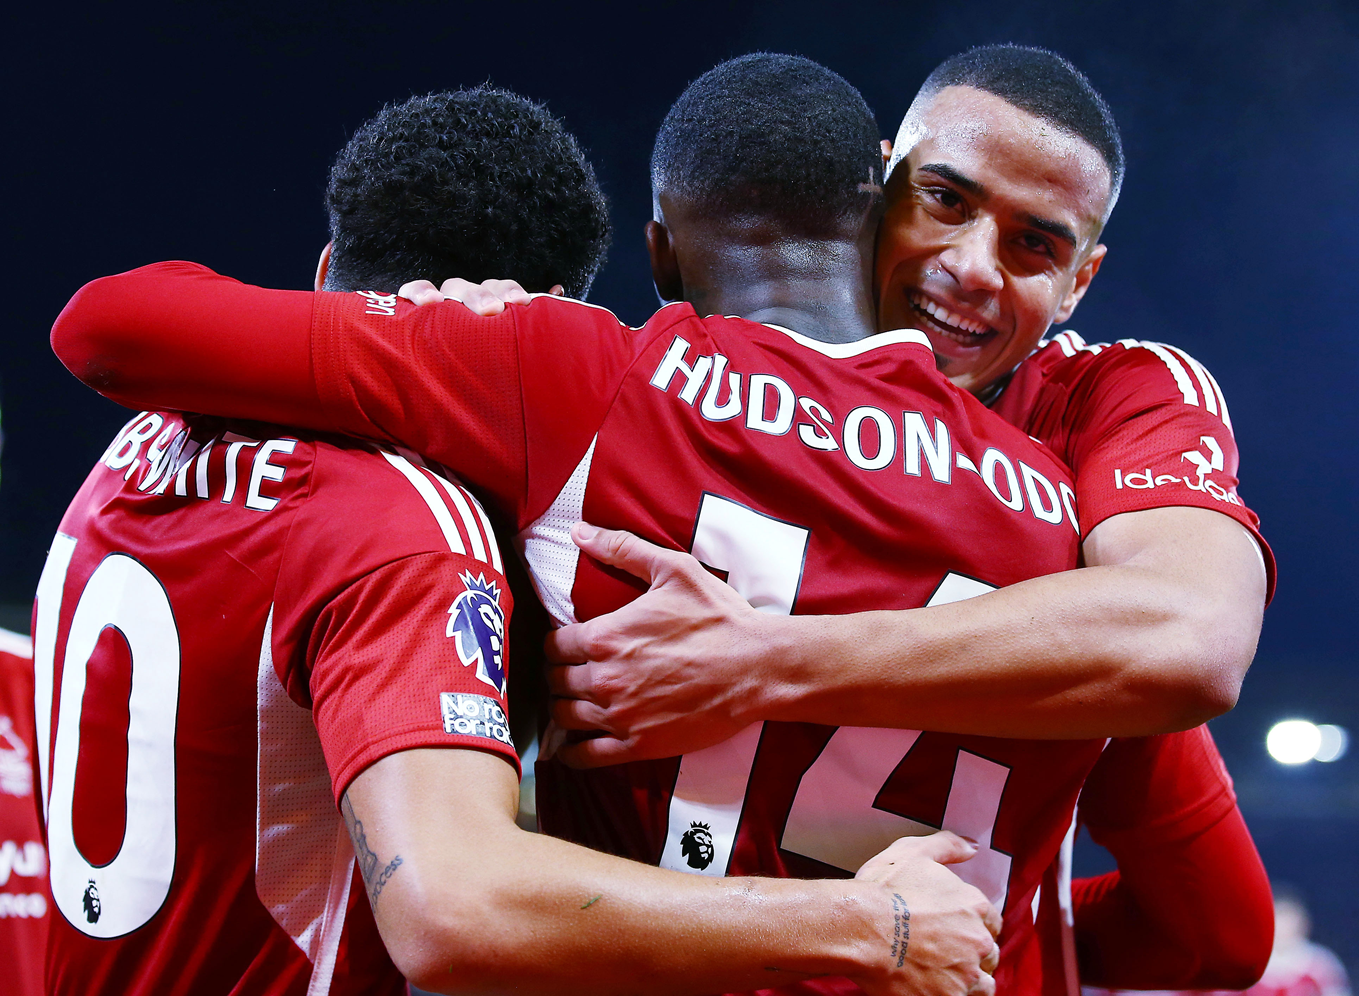 Callum Hudson-Odoi celebrating his goal against Newcastle with his teammates.